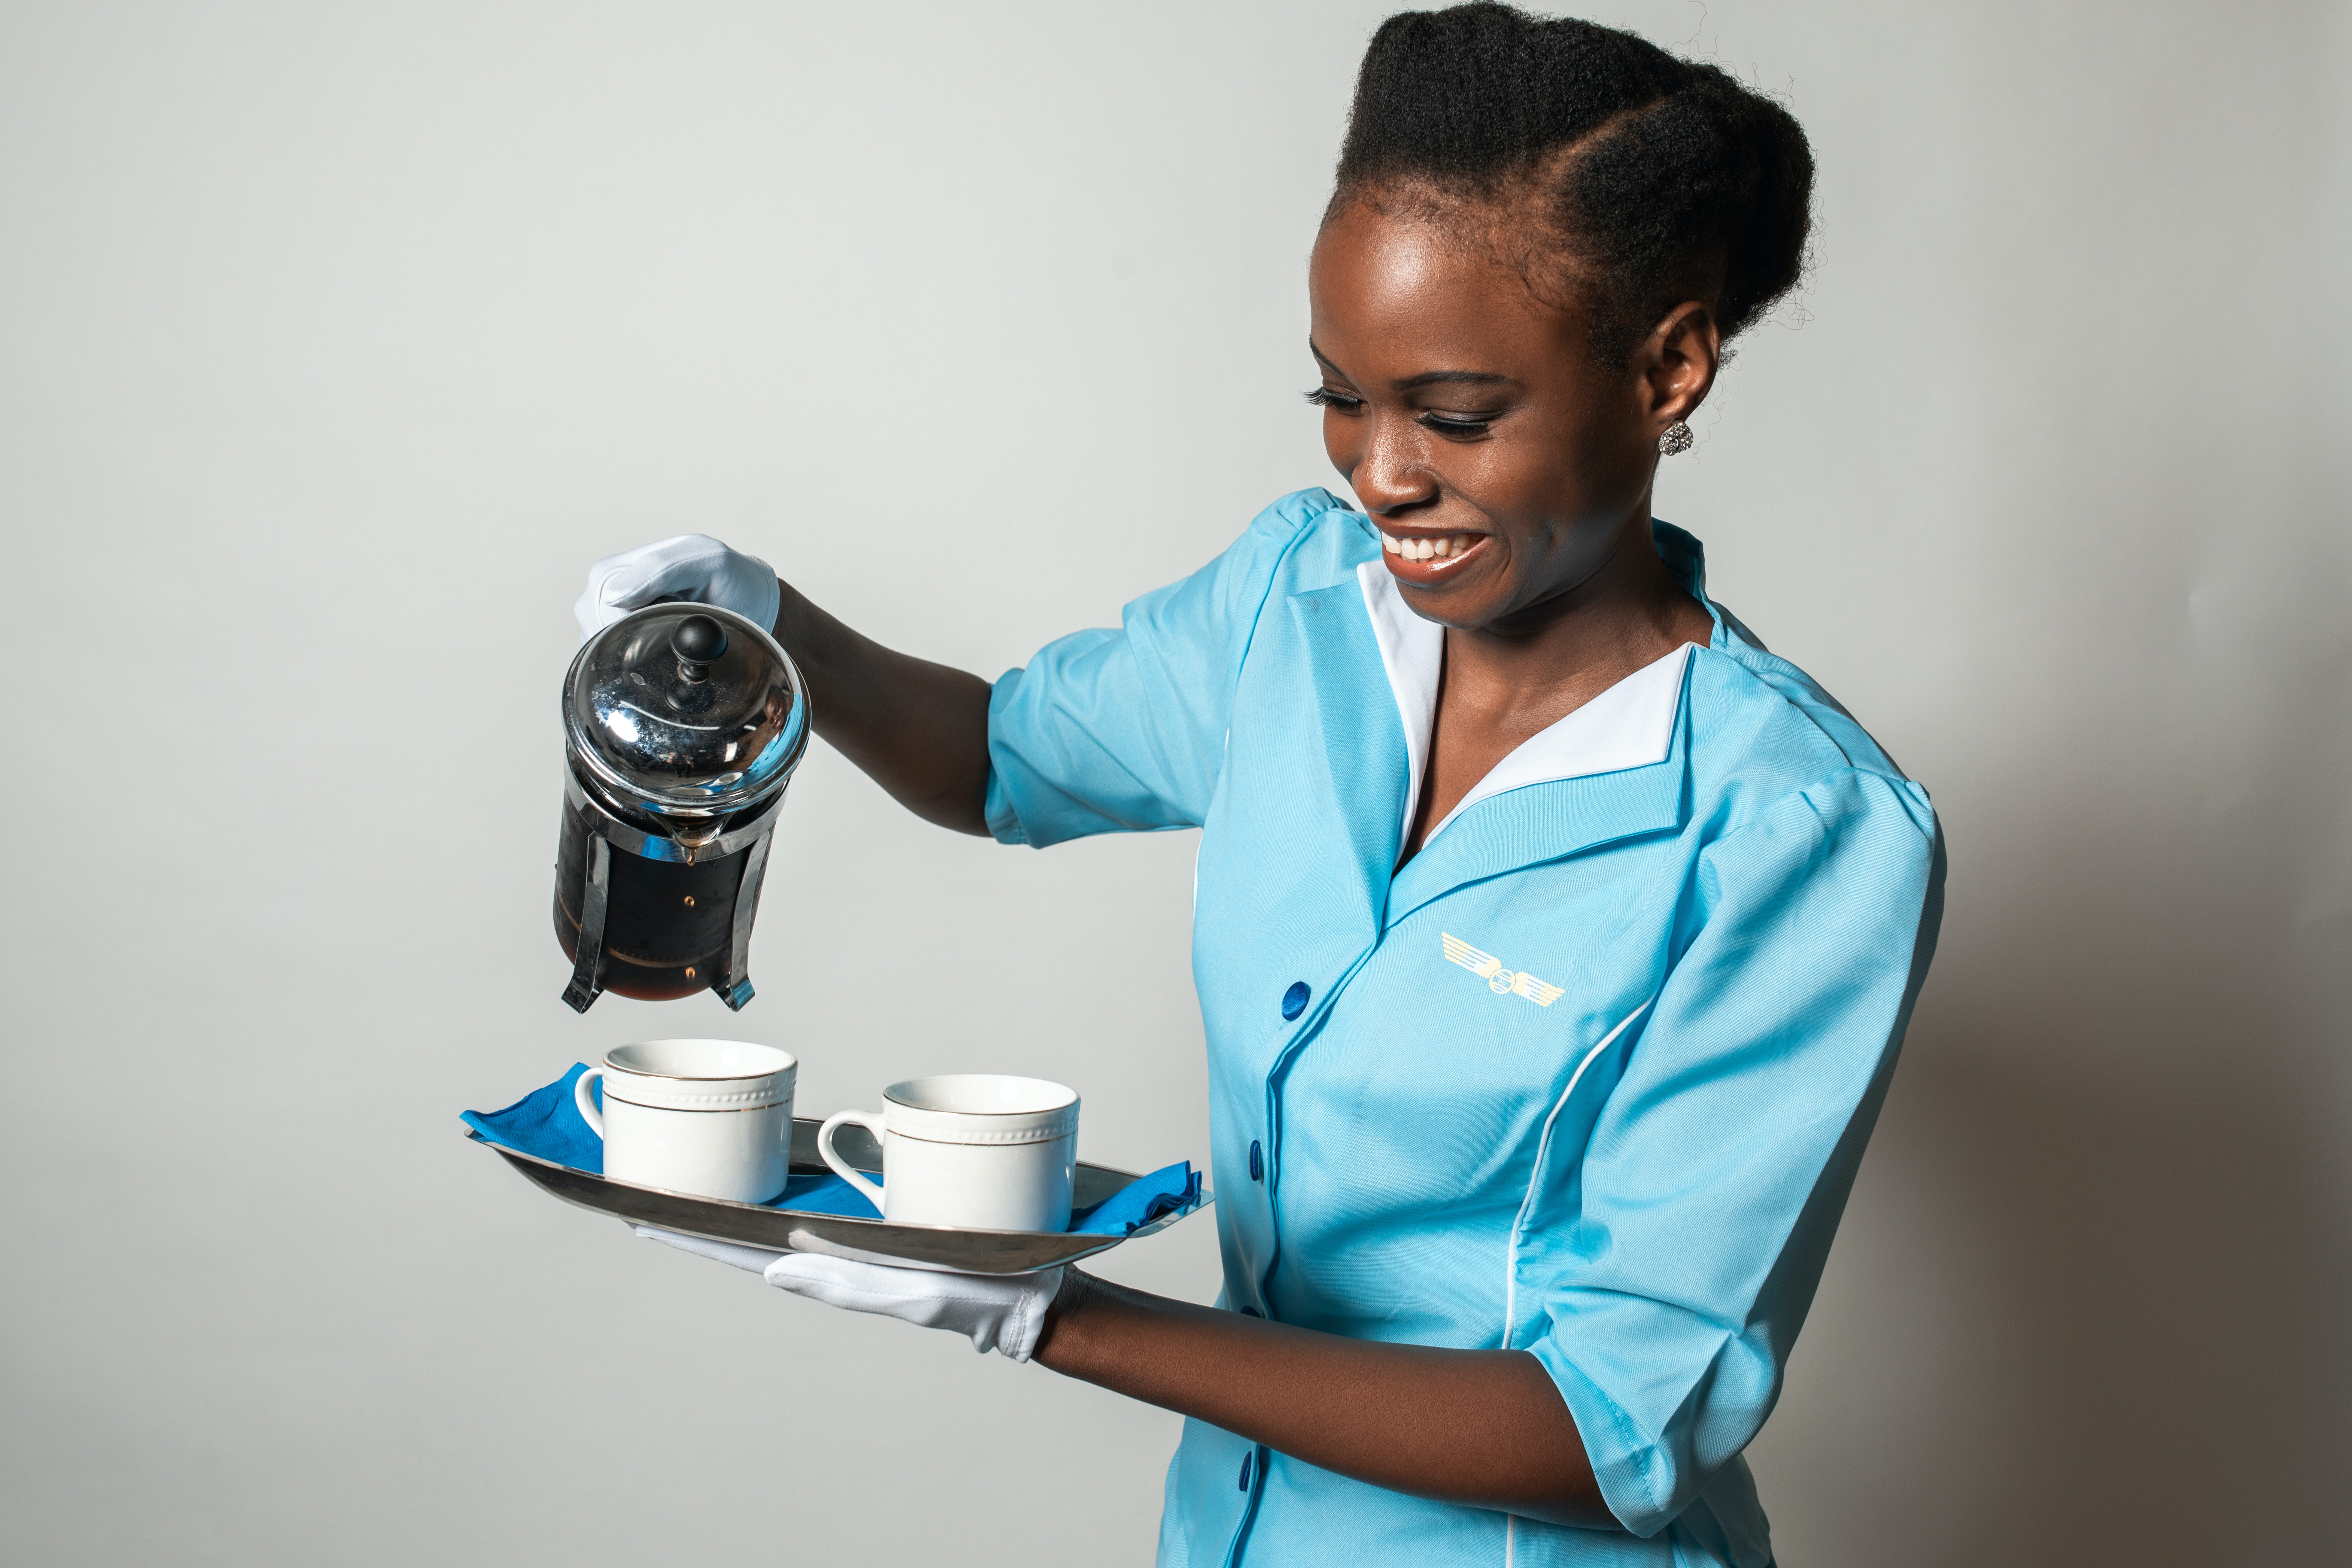 Flight attendant serving coffee | Source: Pexels